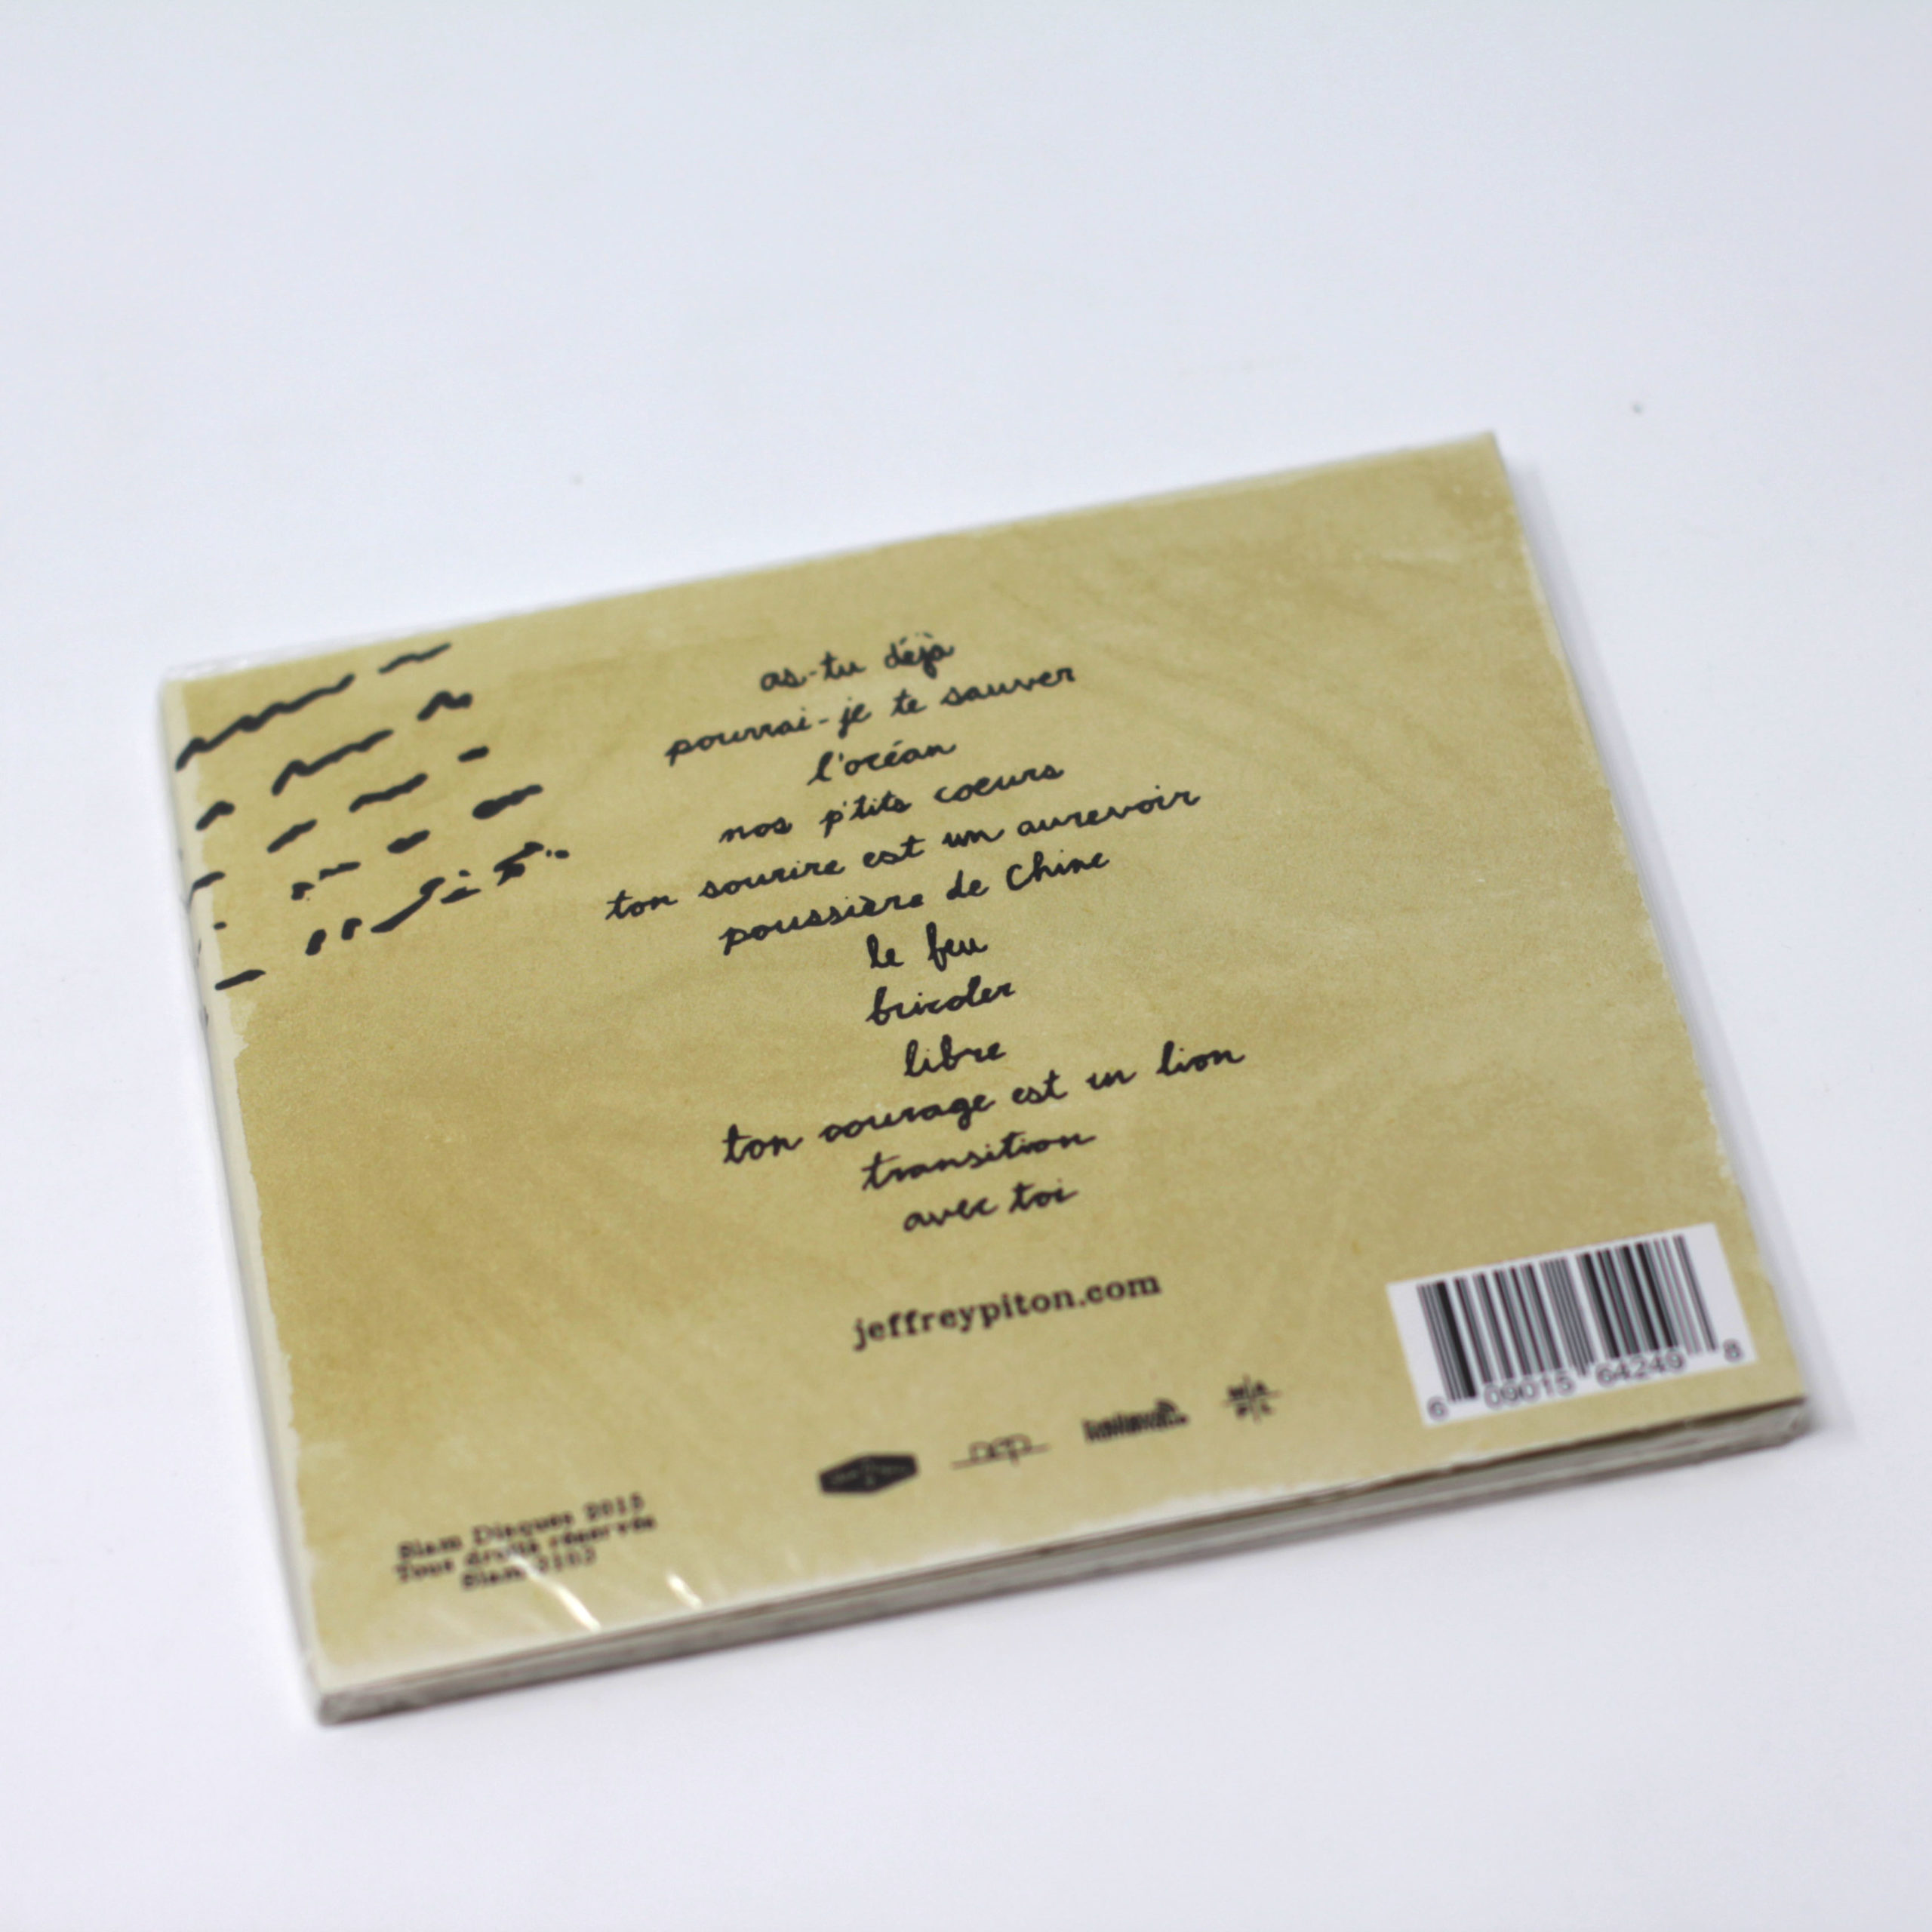 Album “La Transition” (CD) – Jeffrey Piton